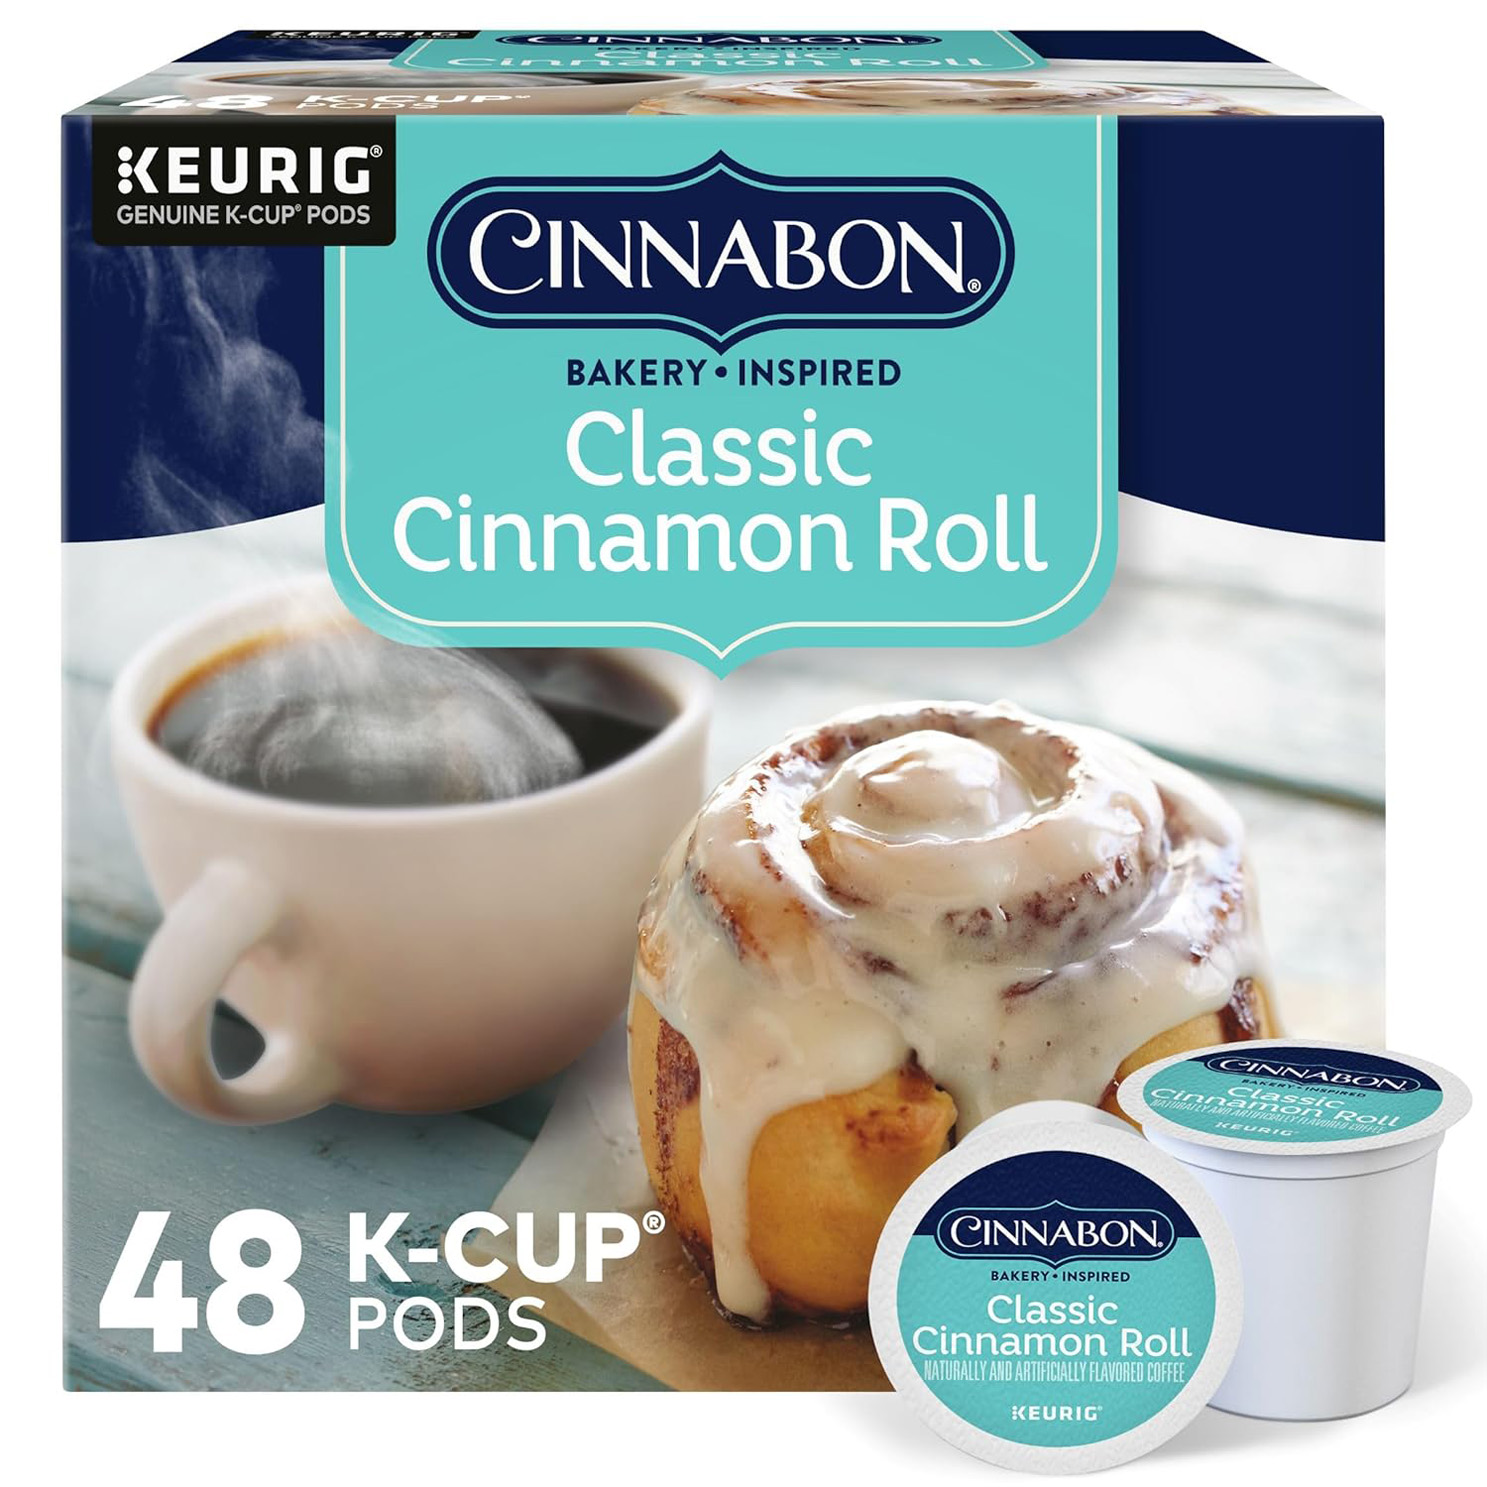 Cinnabon Classic Cinnamon Roll Keurig Single-Serve K-Cup Pods, Light Roast Coffee, 48 Count